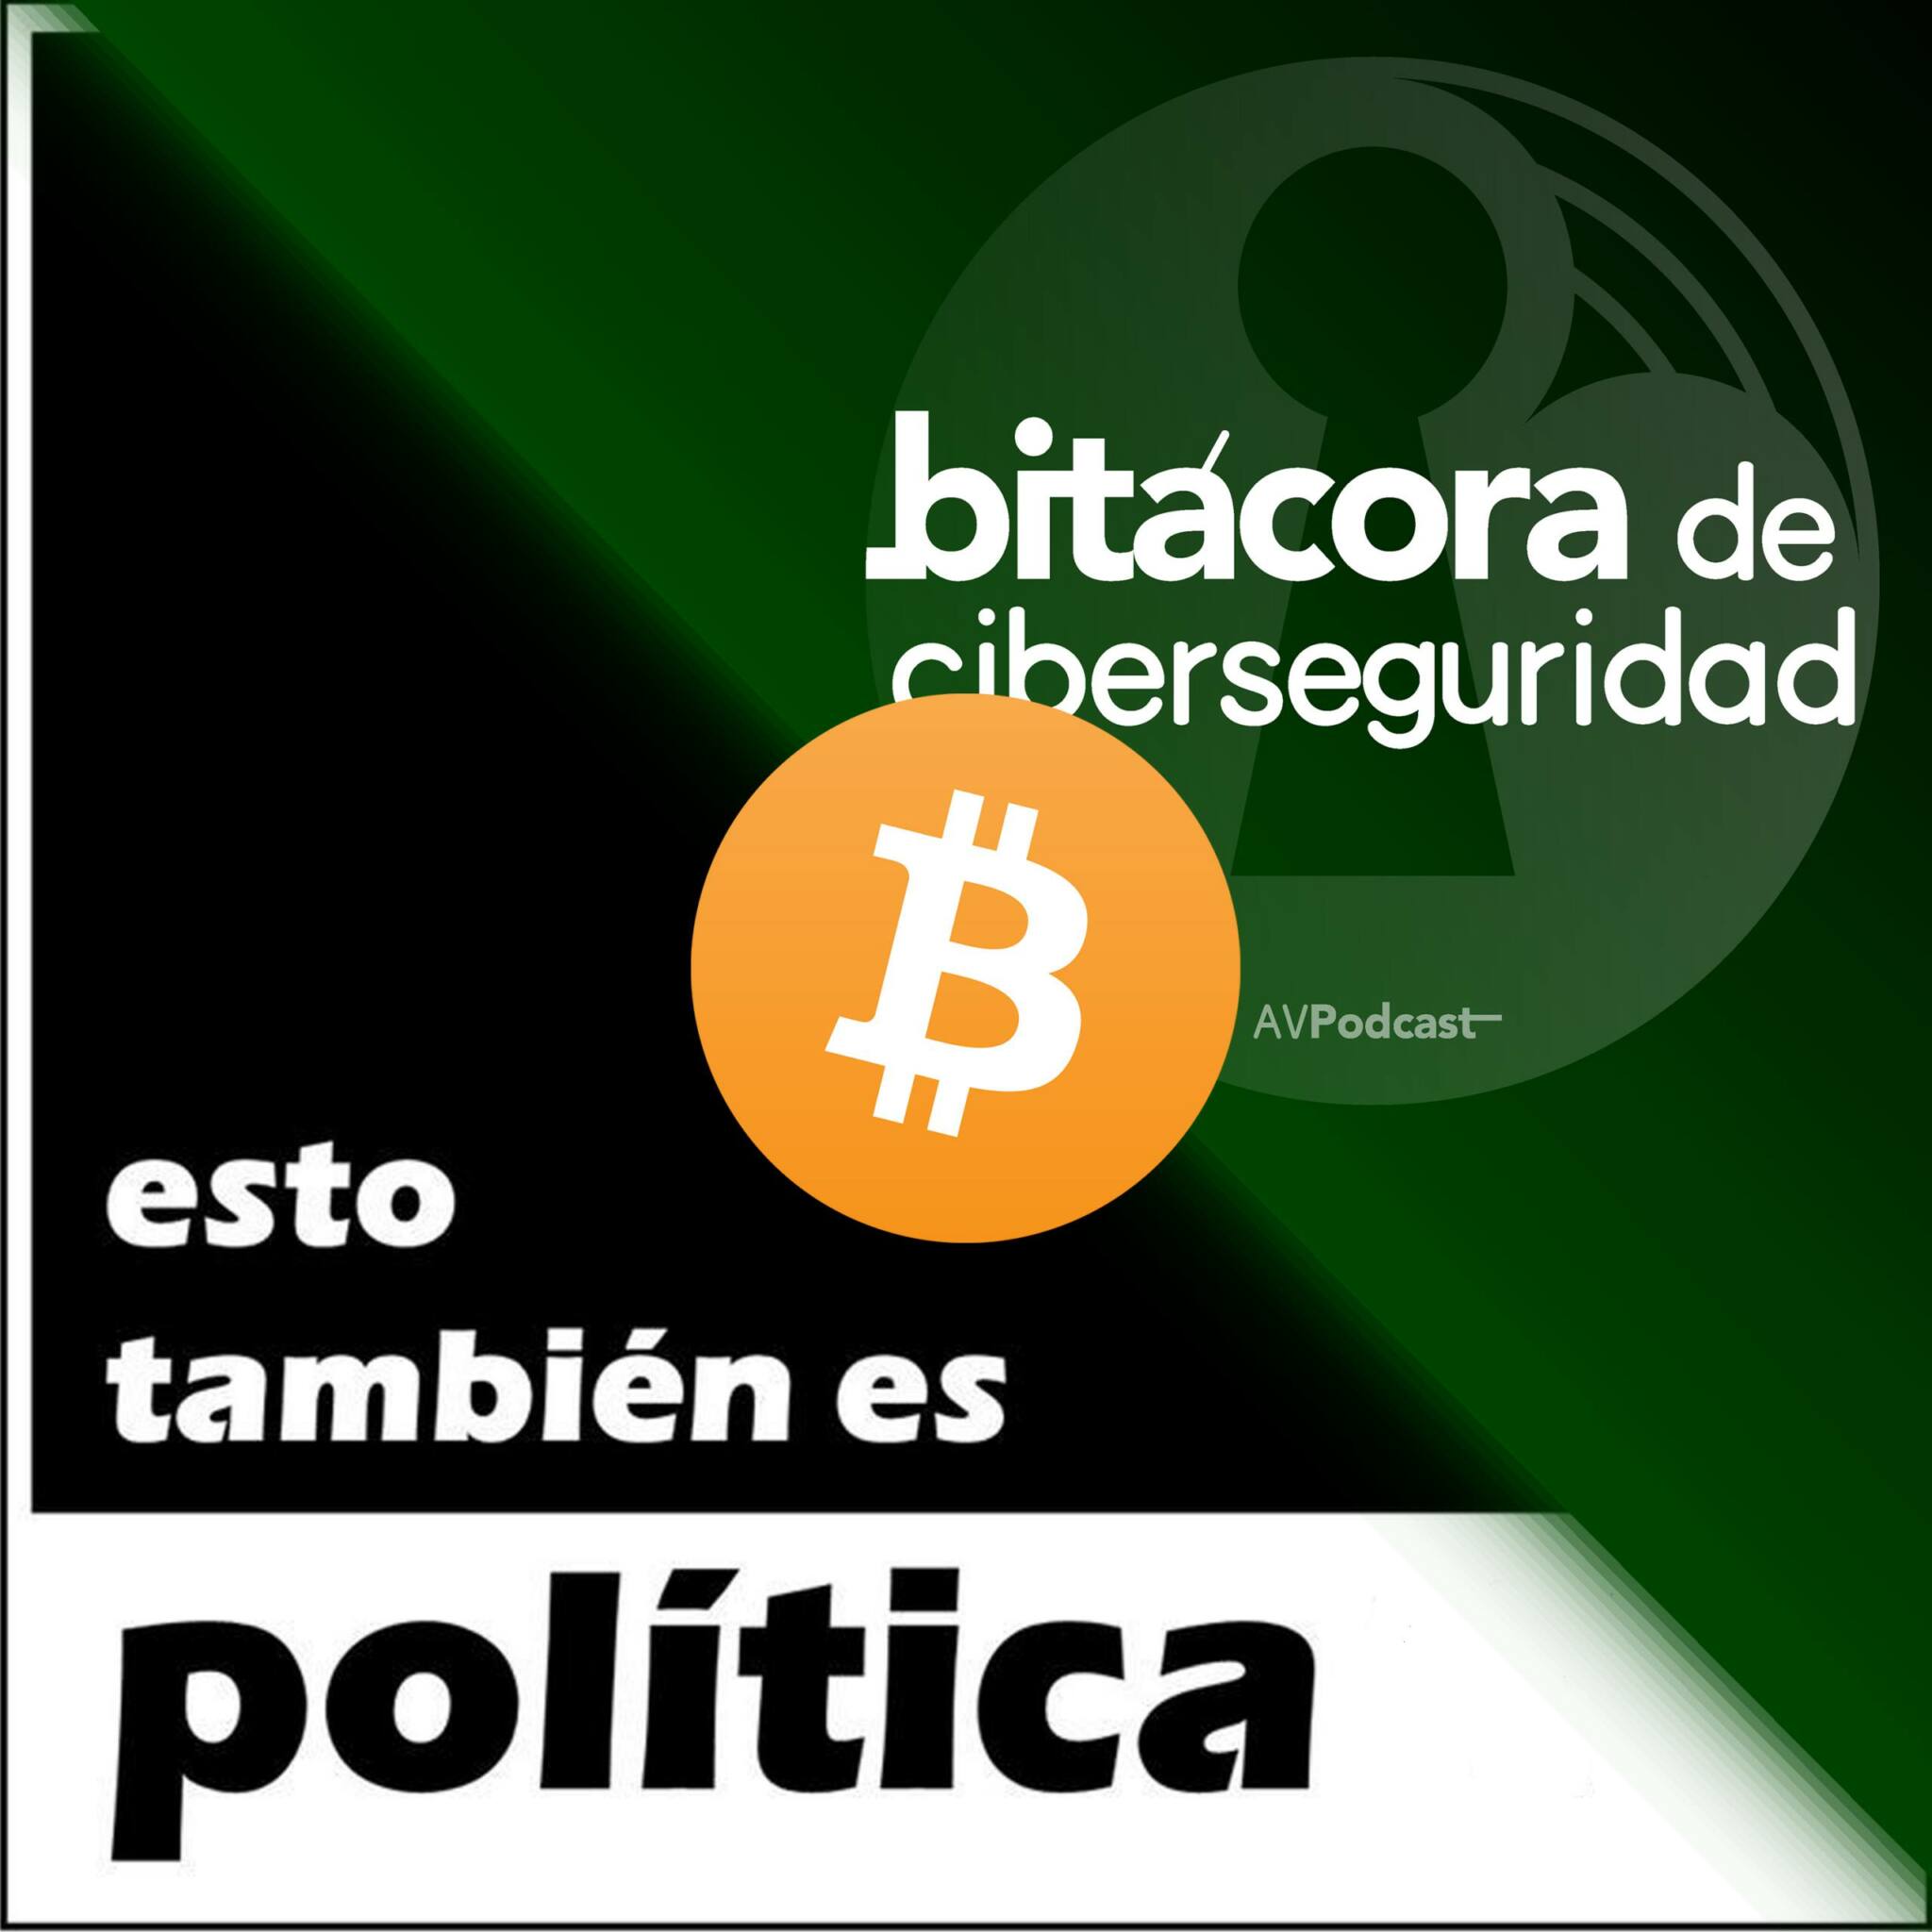 Bitcoin, con ETEPolitica y BitaCiber